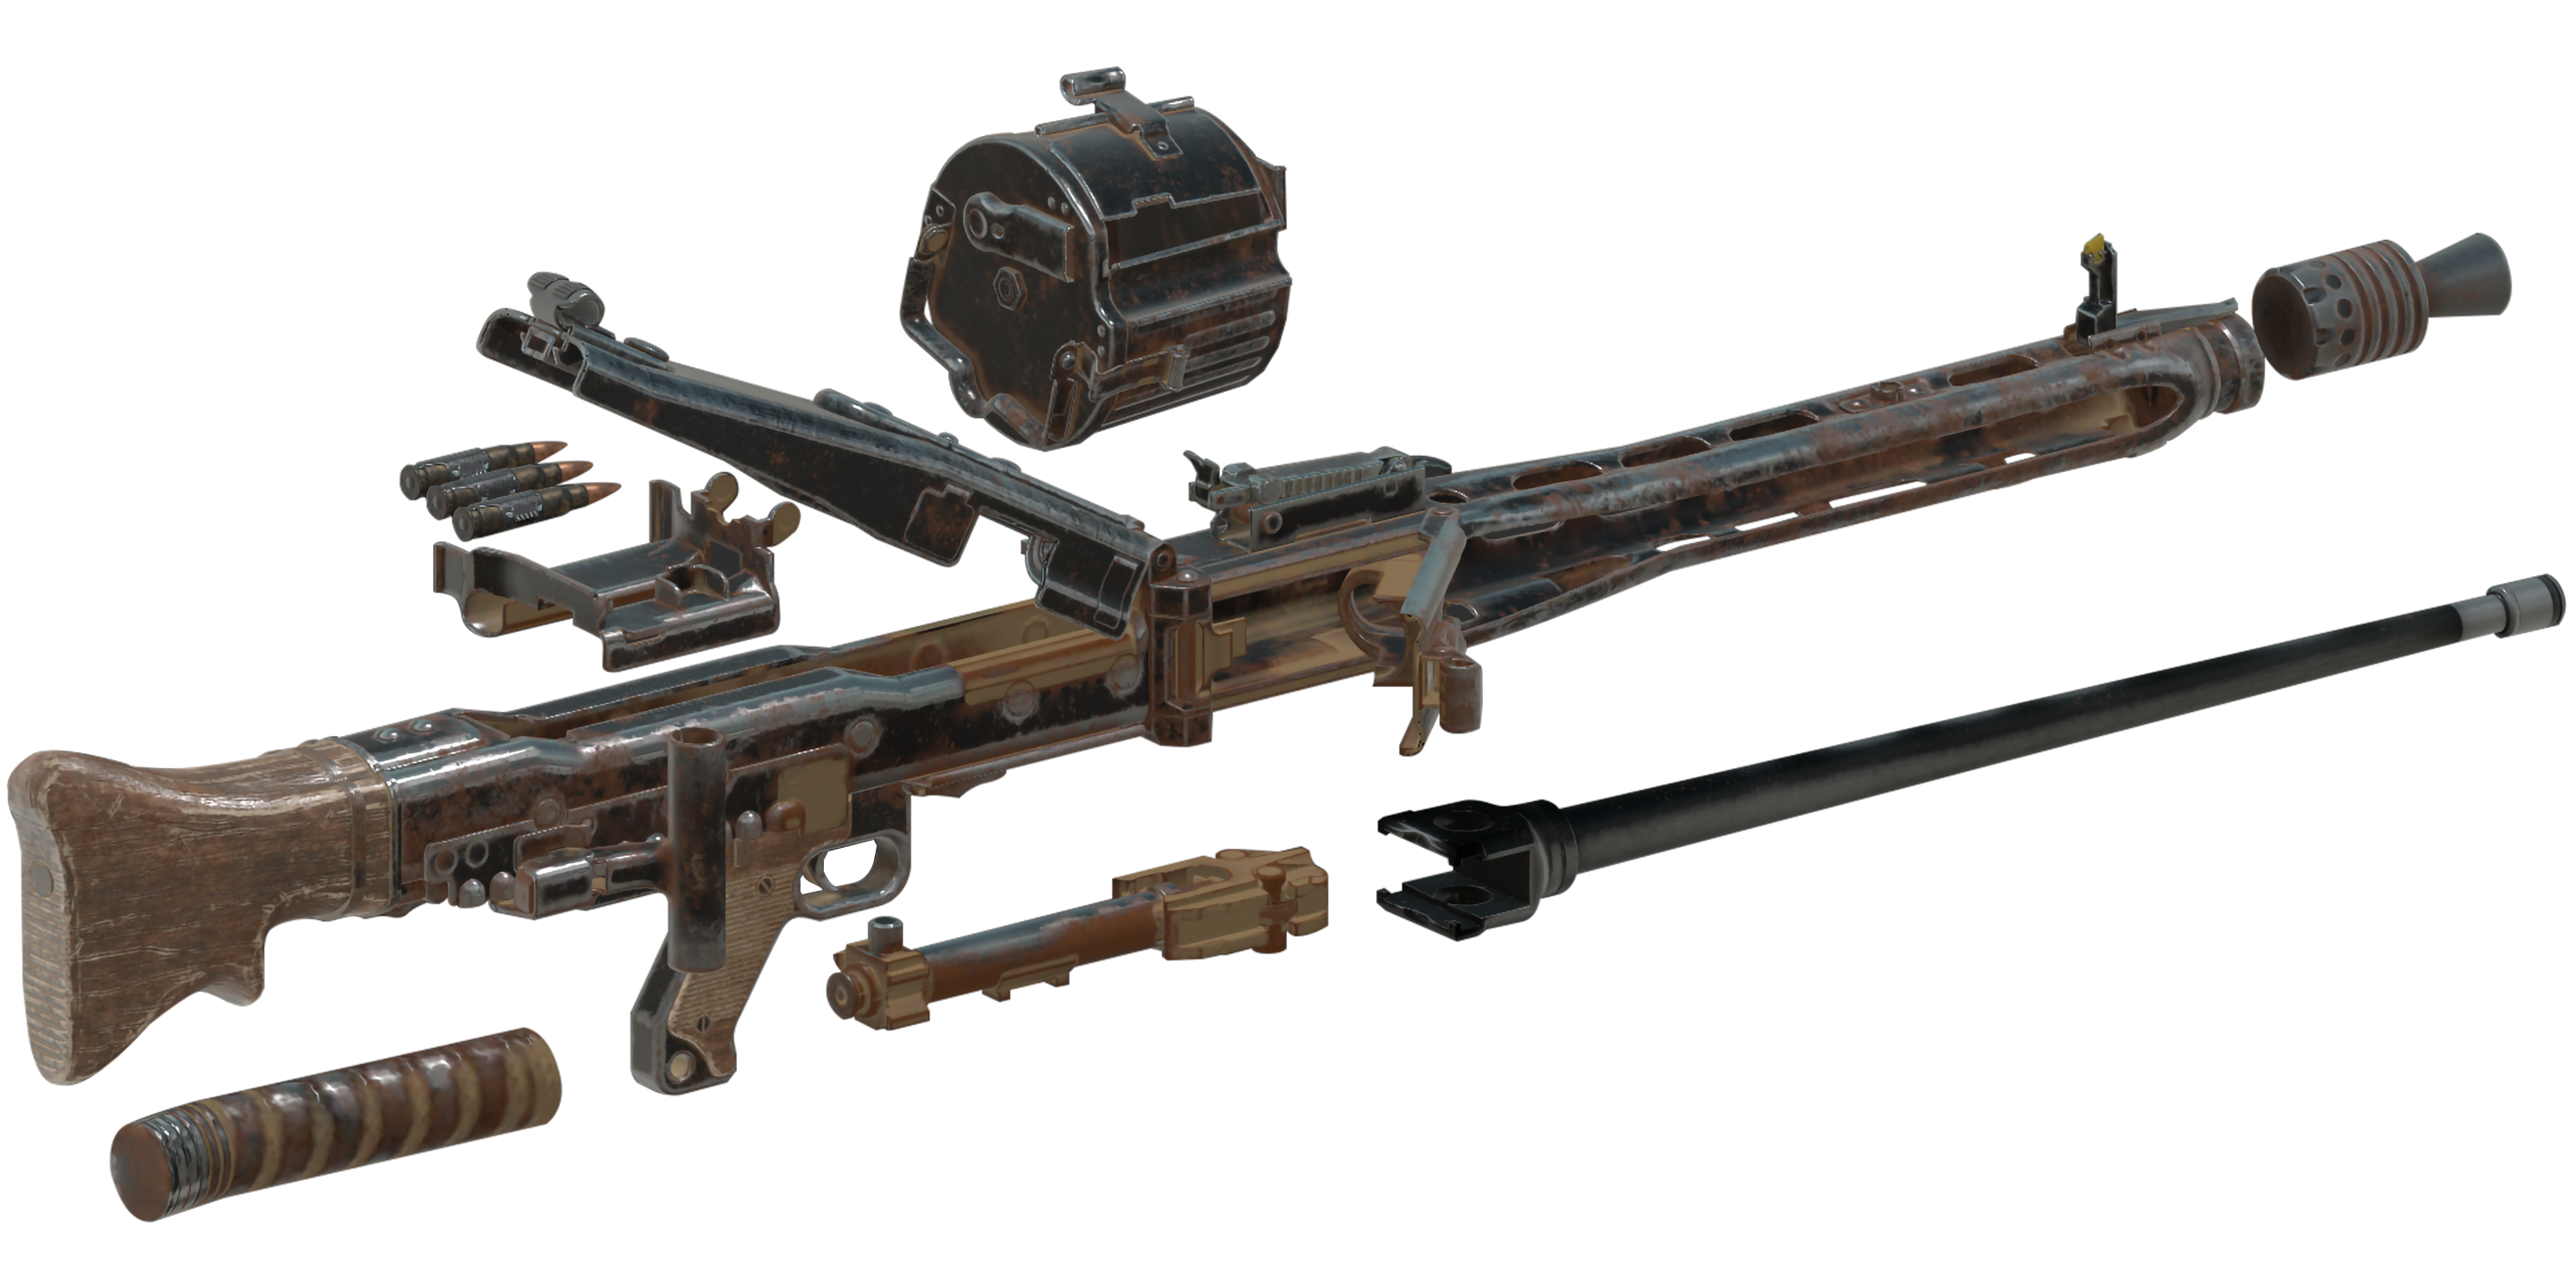 fallout 4 light machine gun